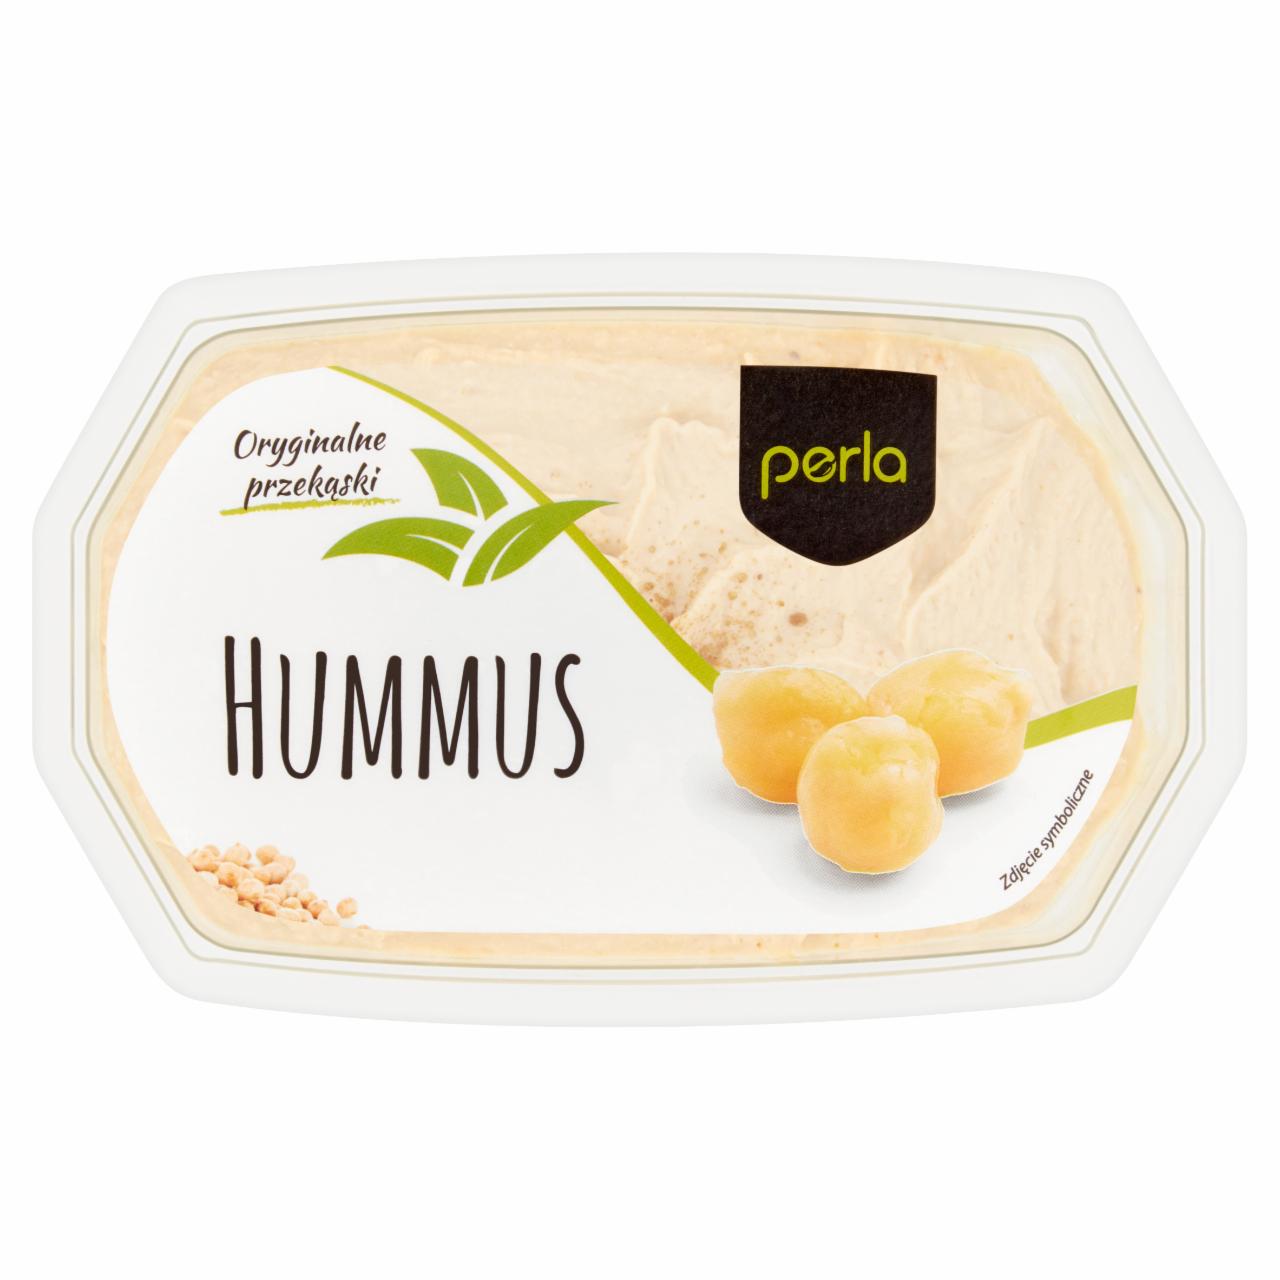 Zdjęcia - Perla Hummus 180 g